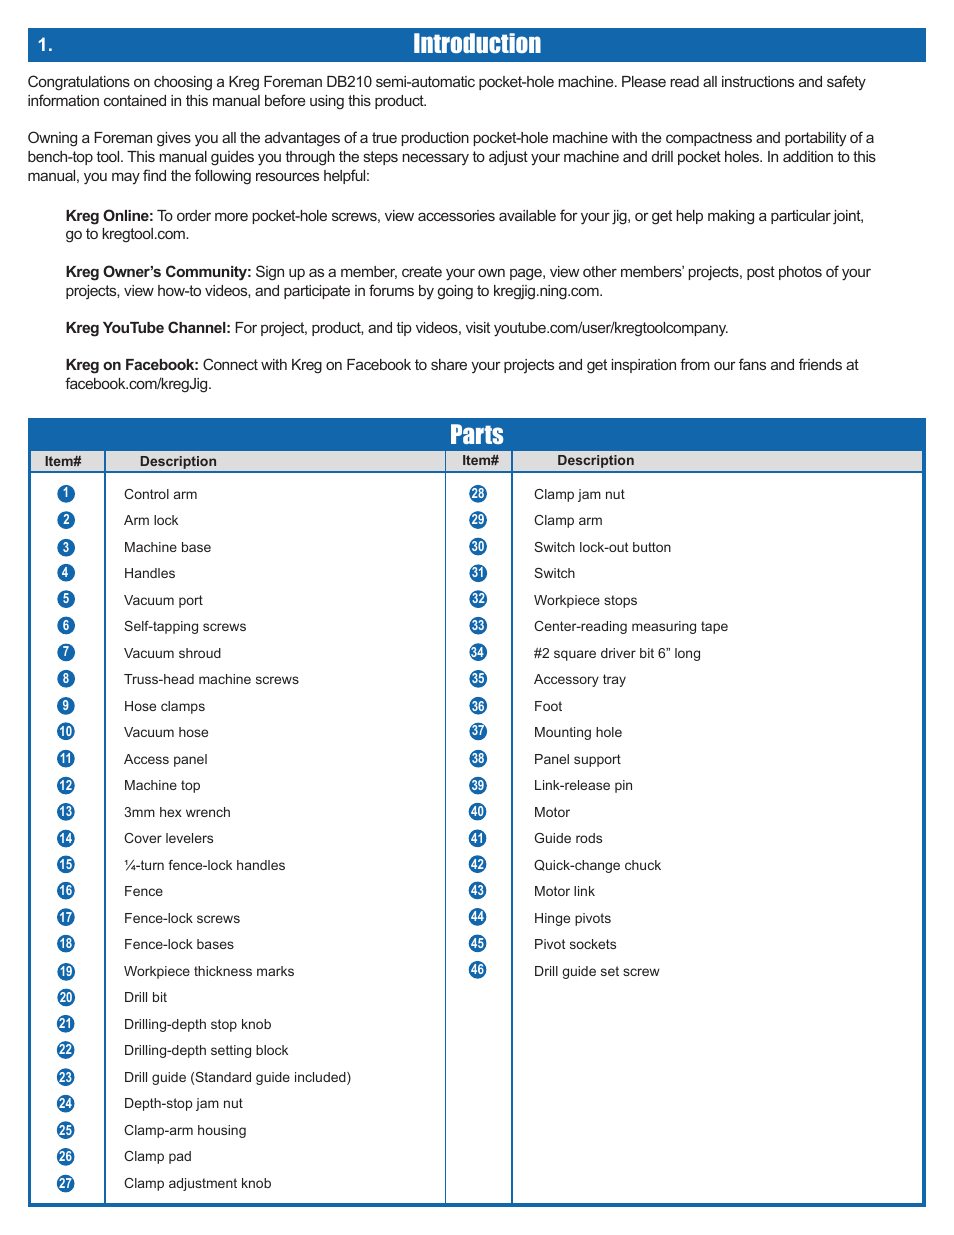 Introduction, Parts | Kreg DB210 Foreman Pocket-Hole Machine User Manual | Page 4 / 44